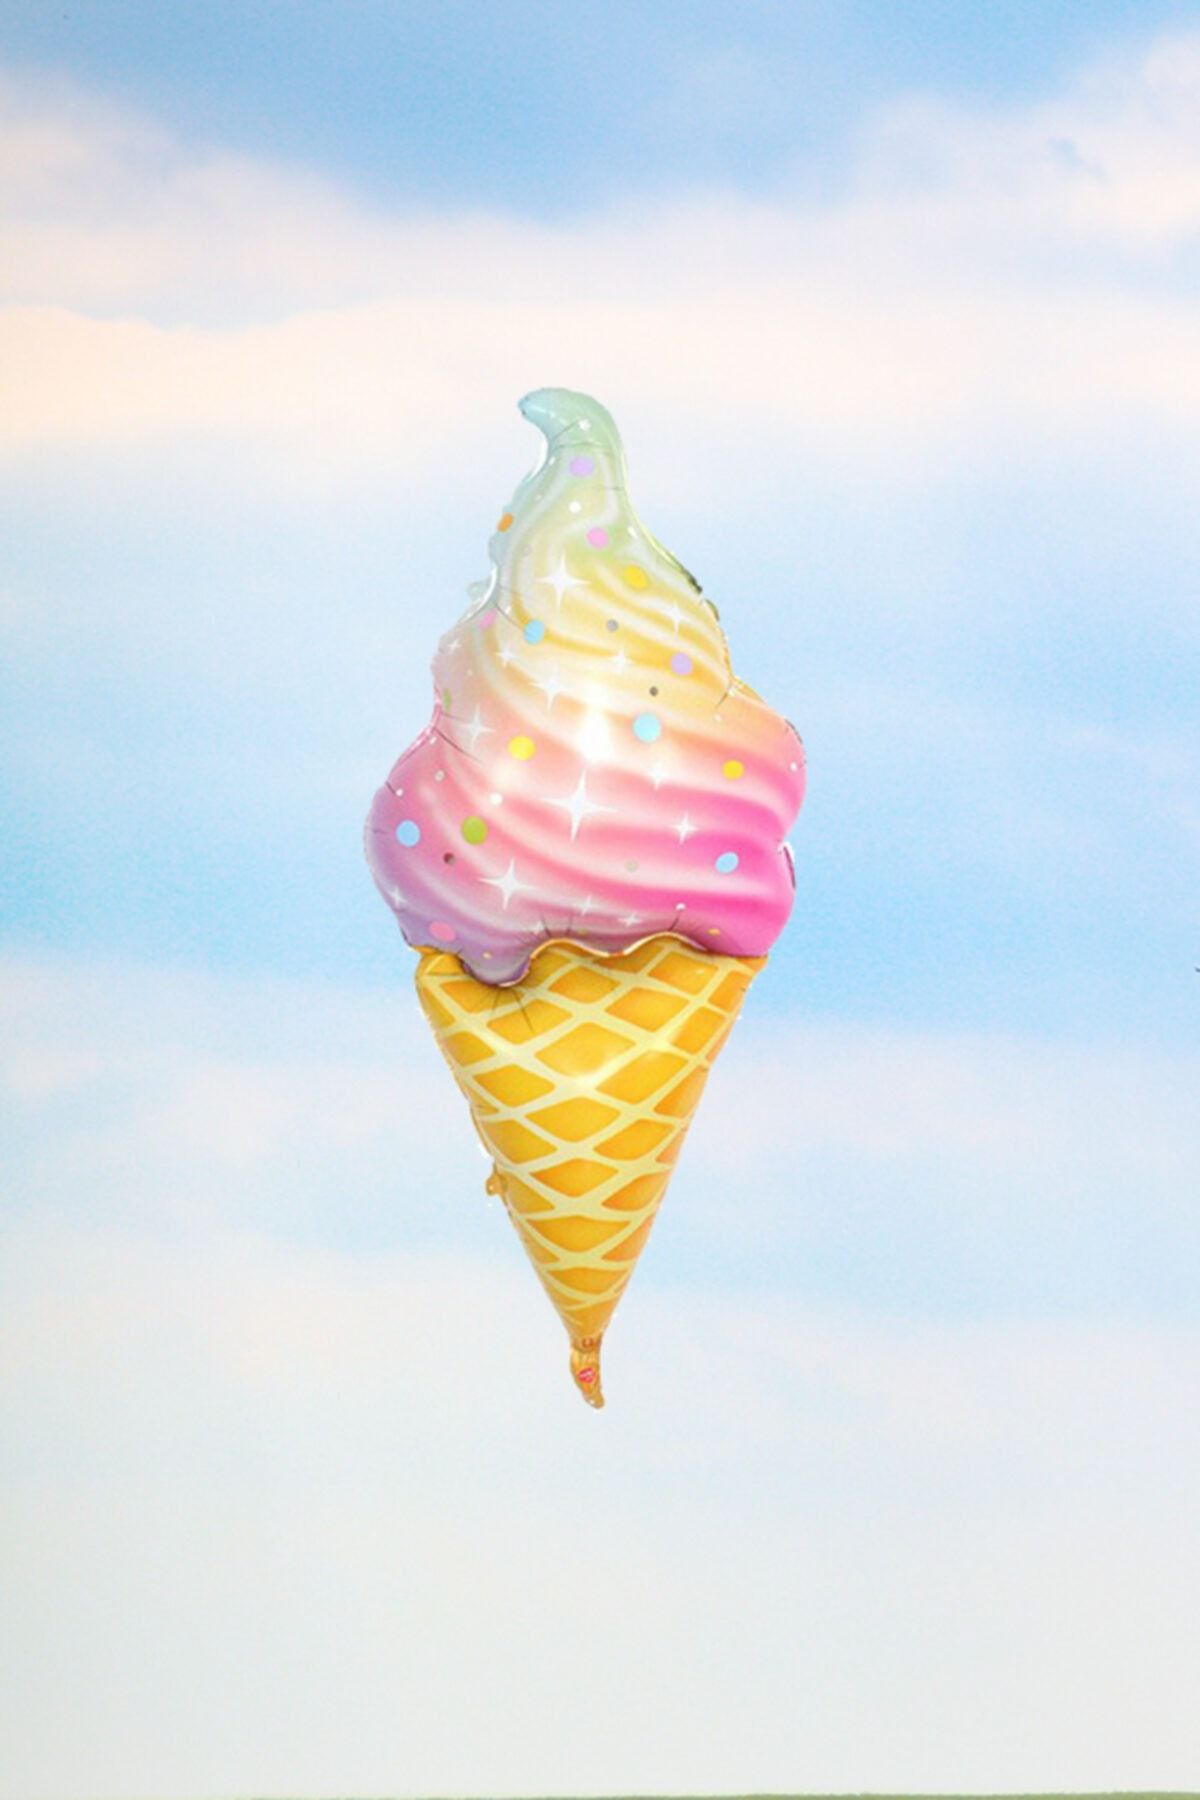 PEKSHOP Dondurma Balon , Renkli Dondurma Külah Şekilli Balon, Dondurma Konsept Doğum Günü Süsü